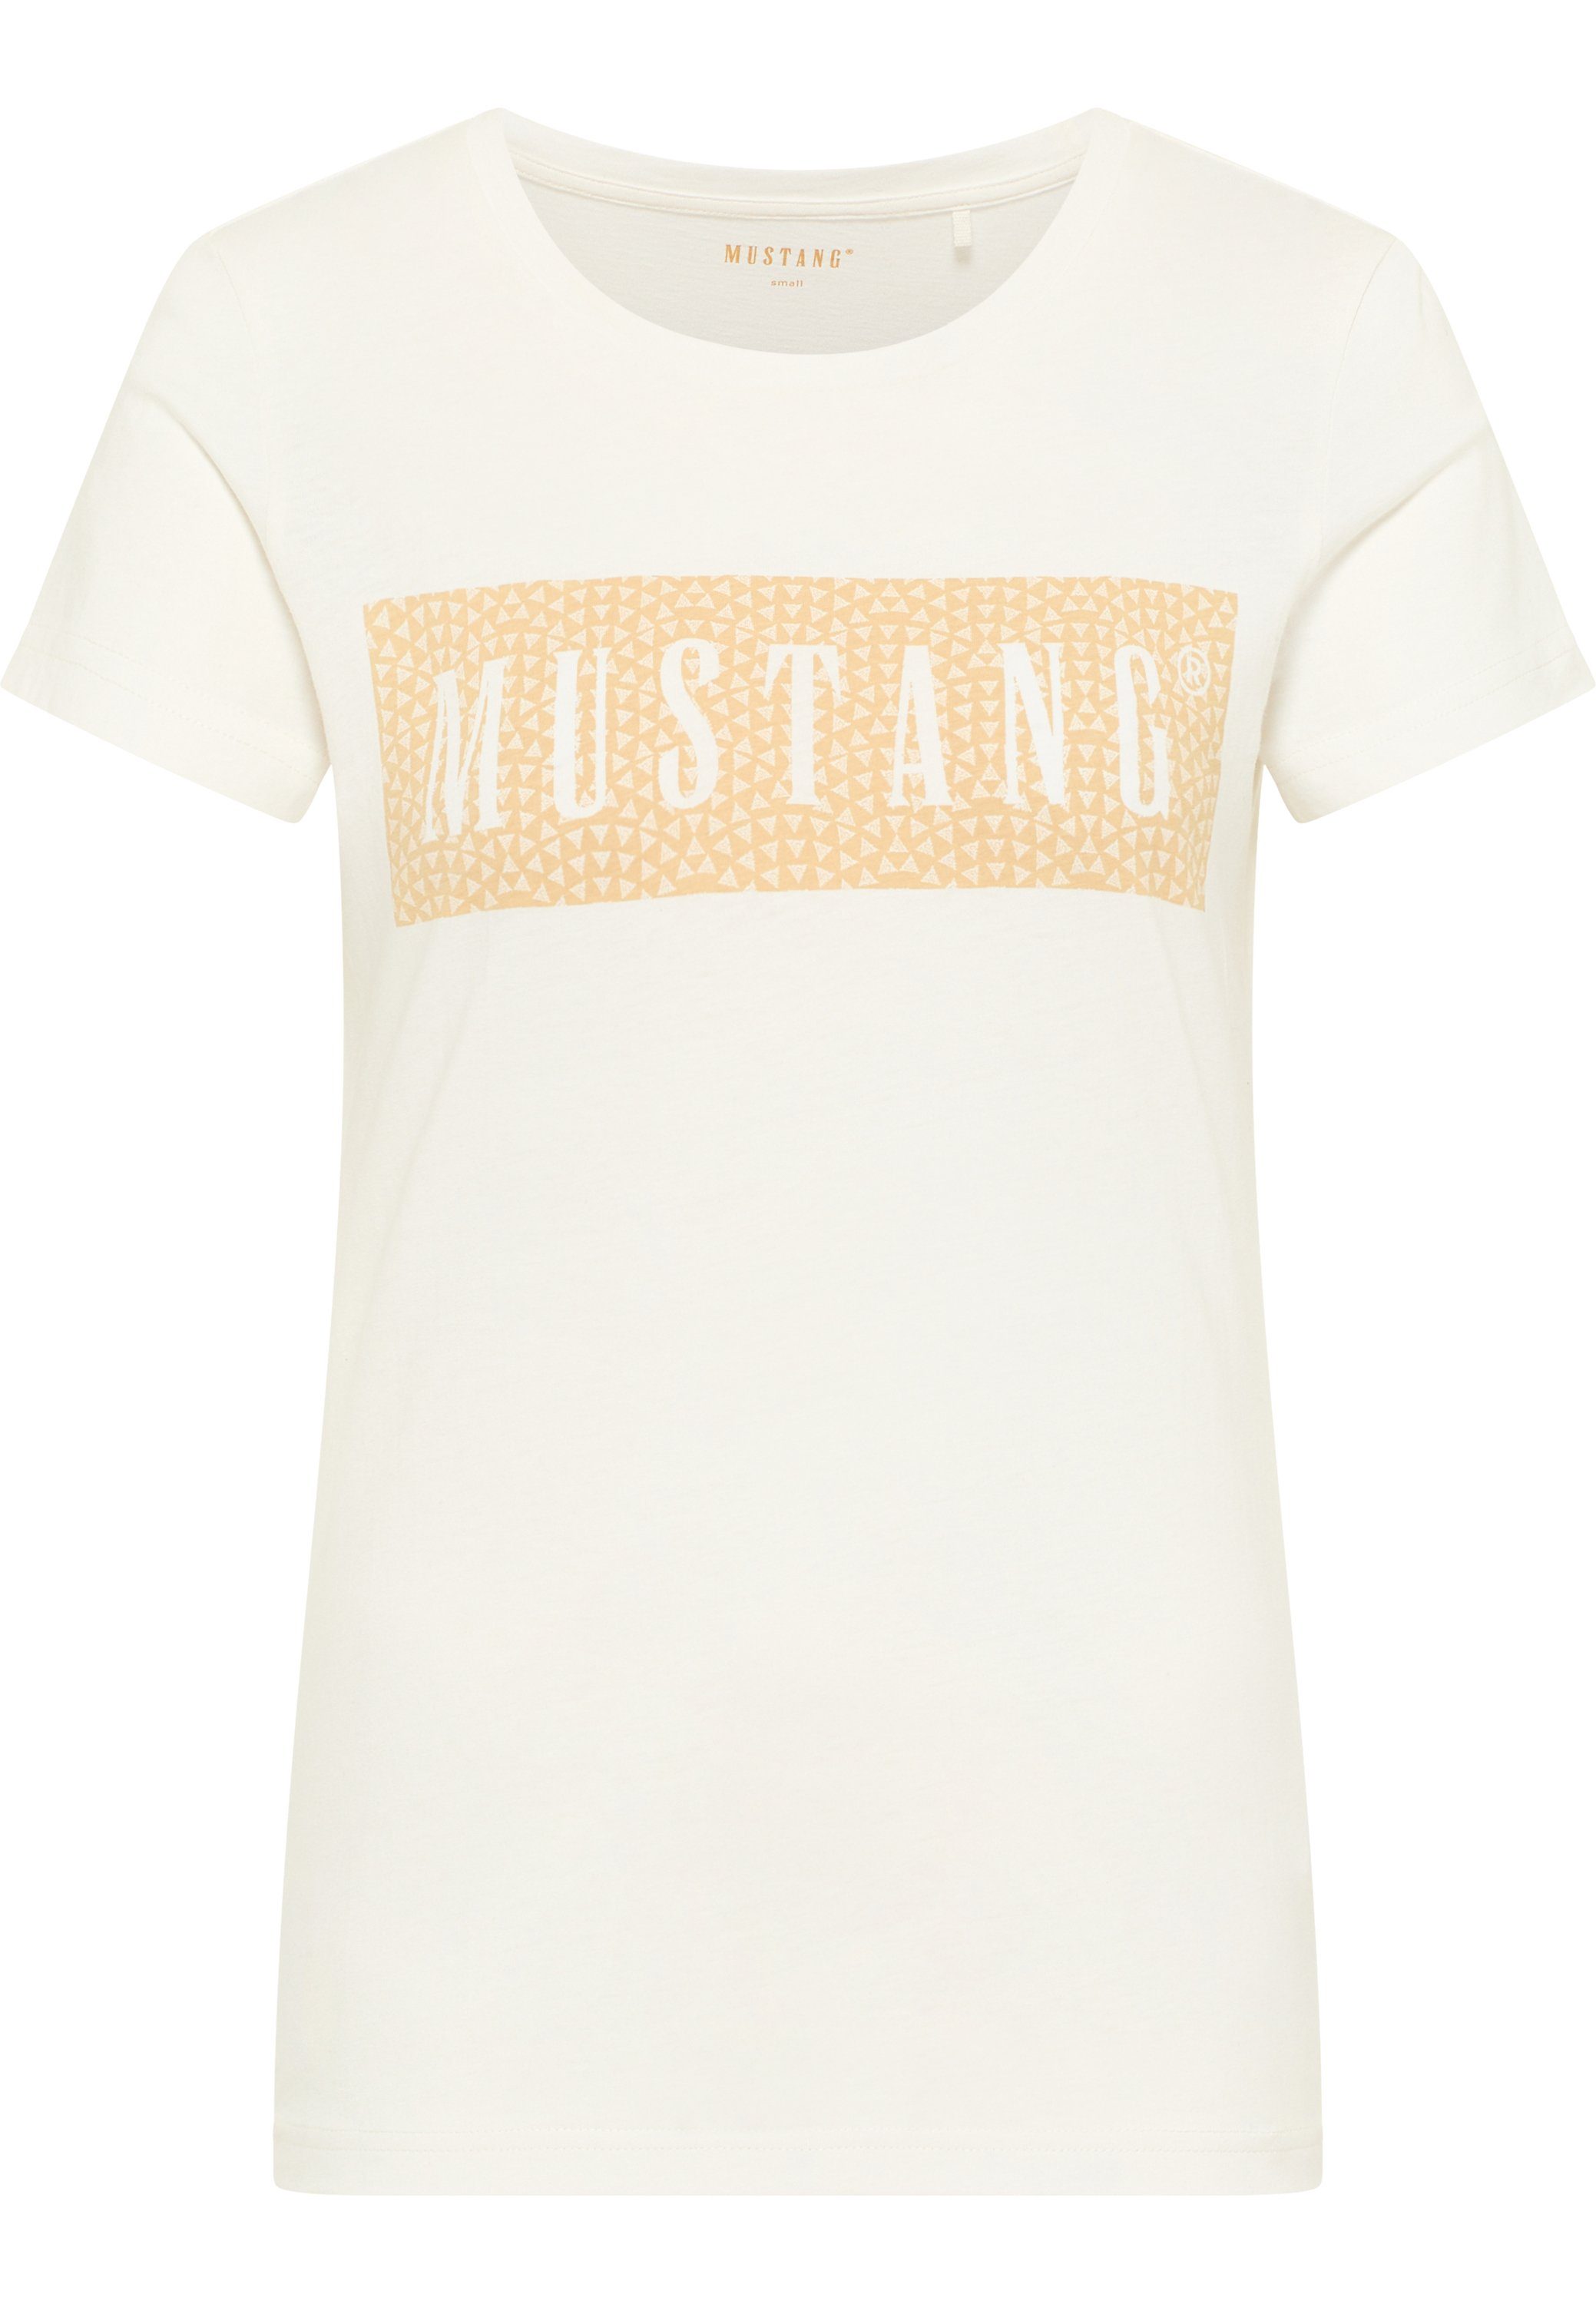 Mustang Print-Shirt Kurzarmshirt MUSTANG offwhite T-Shirt